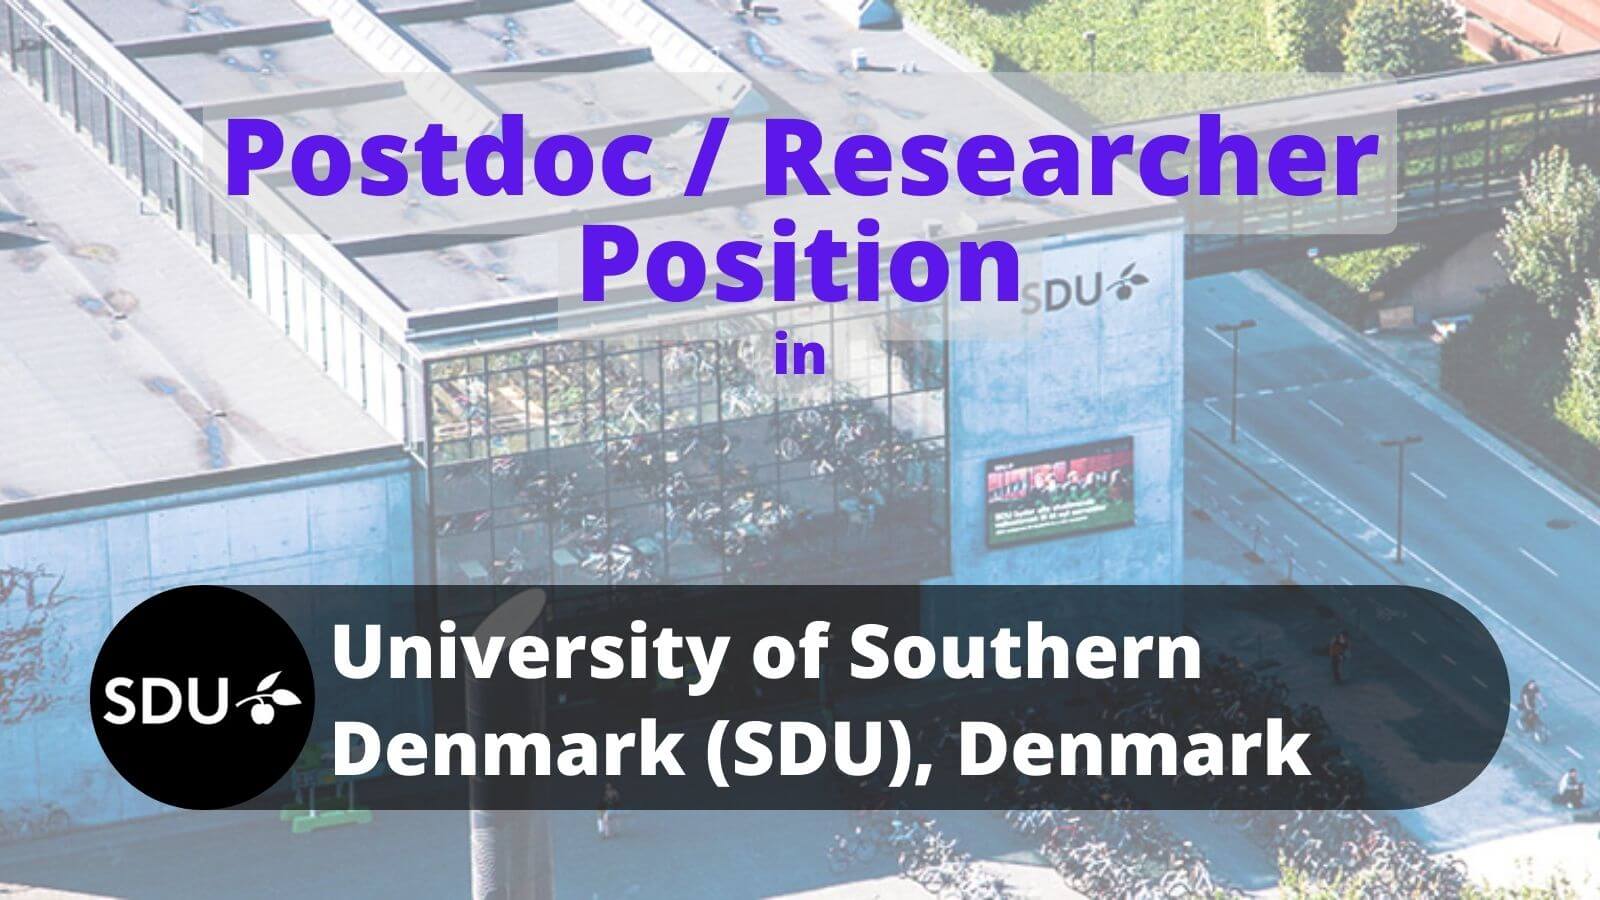 Postdoc jobs or Researcher Position SDU University of Southern Denmark